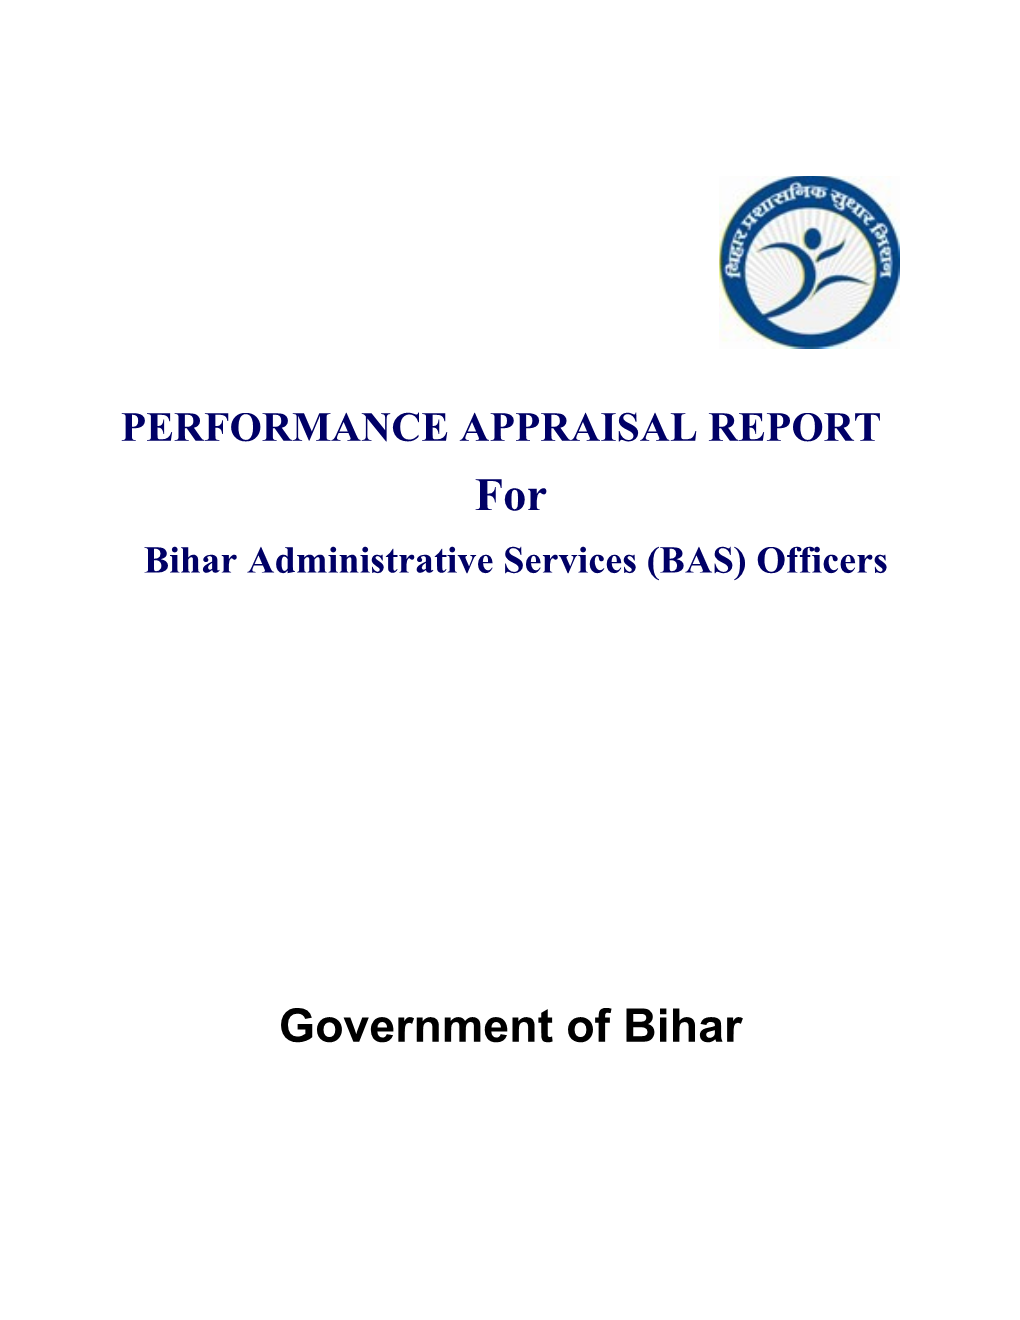 Performance Appraisal Report s1